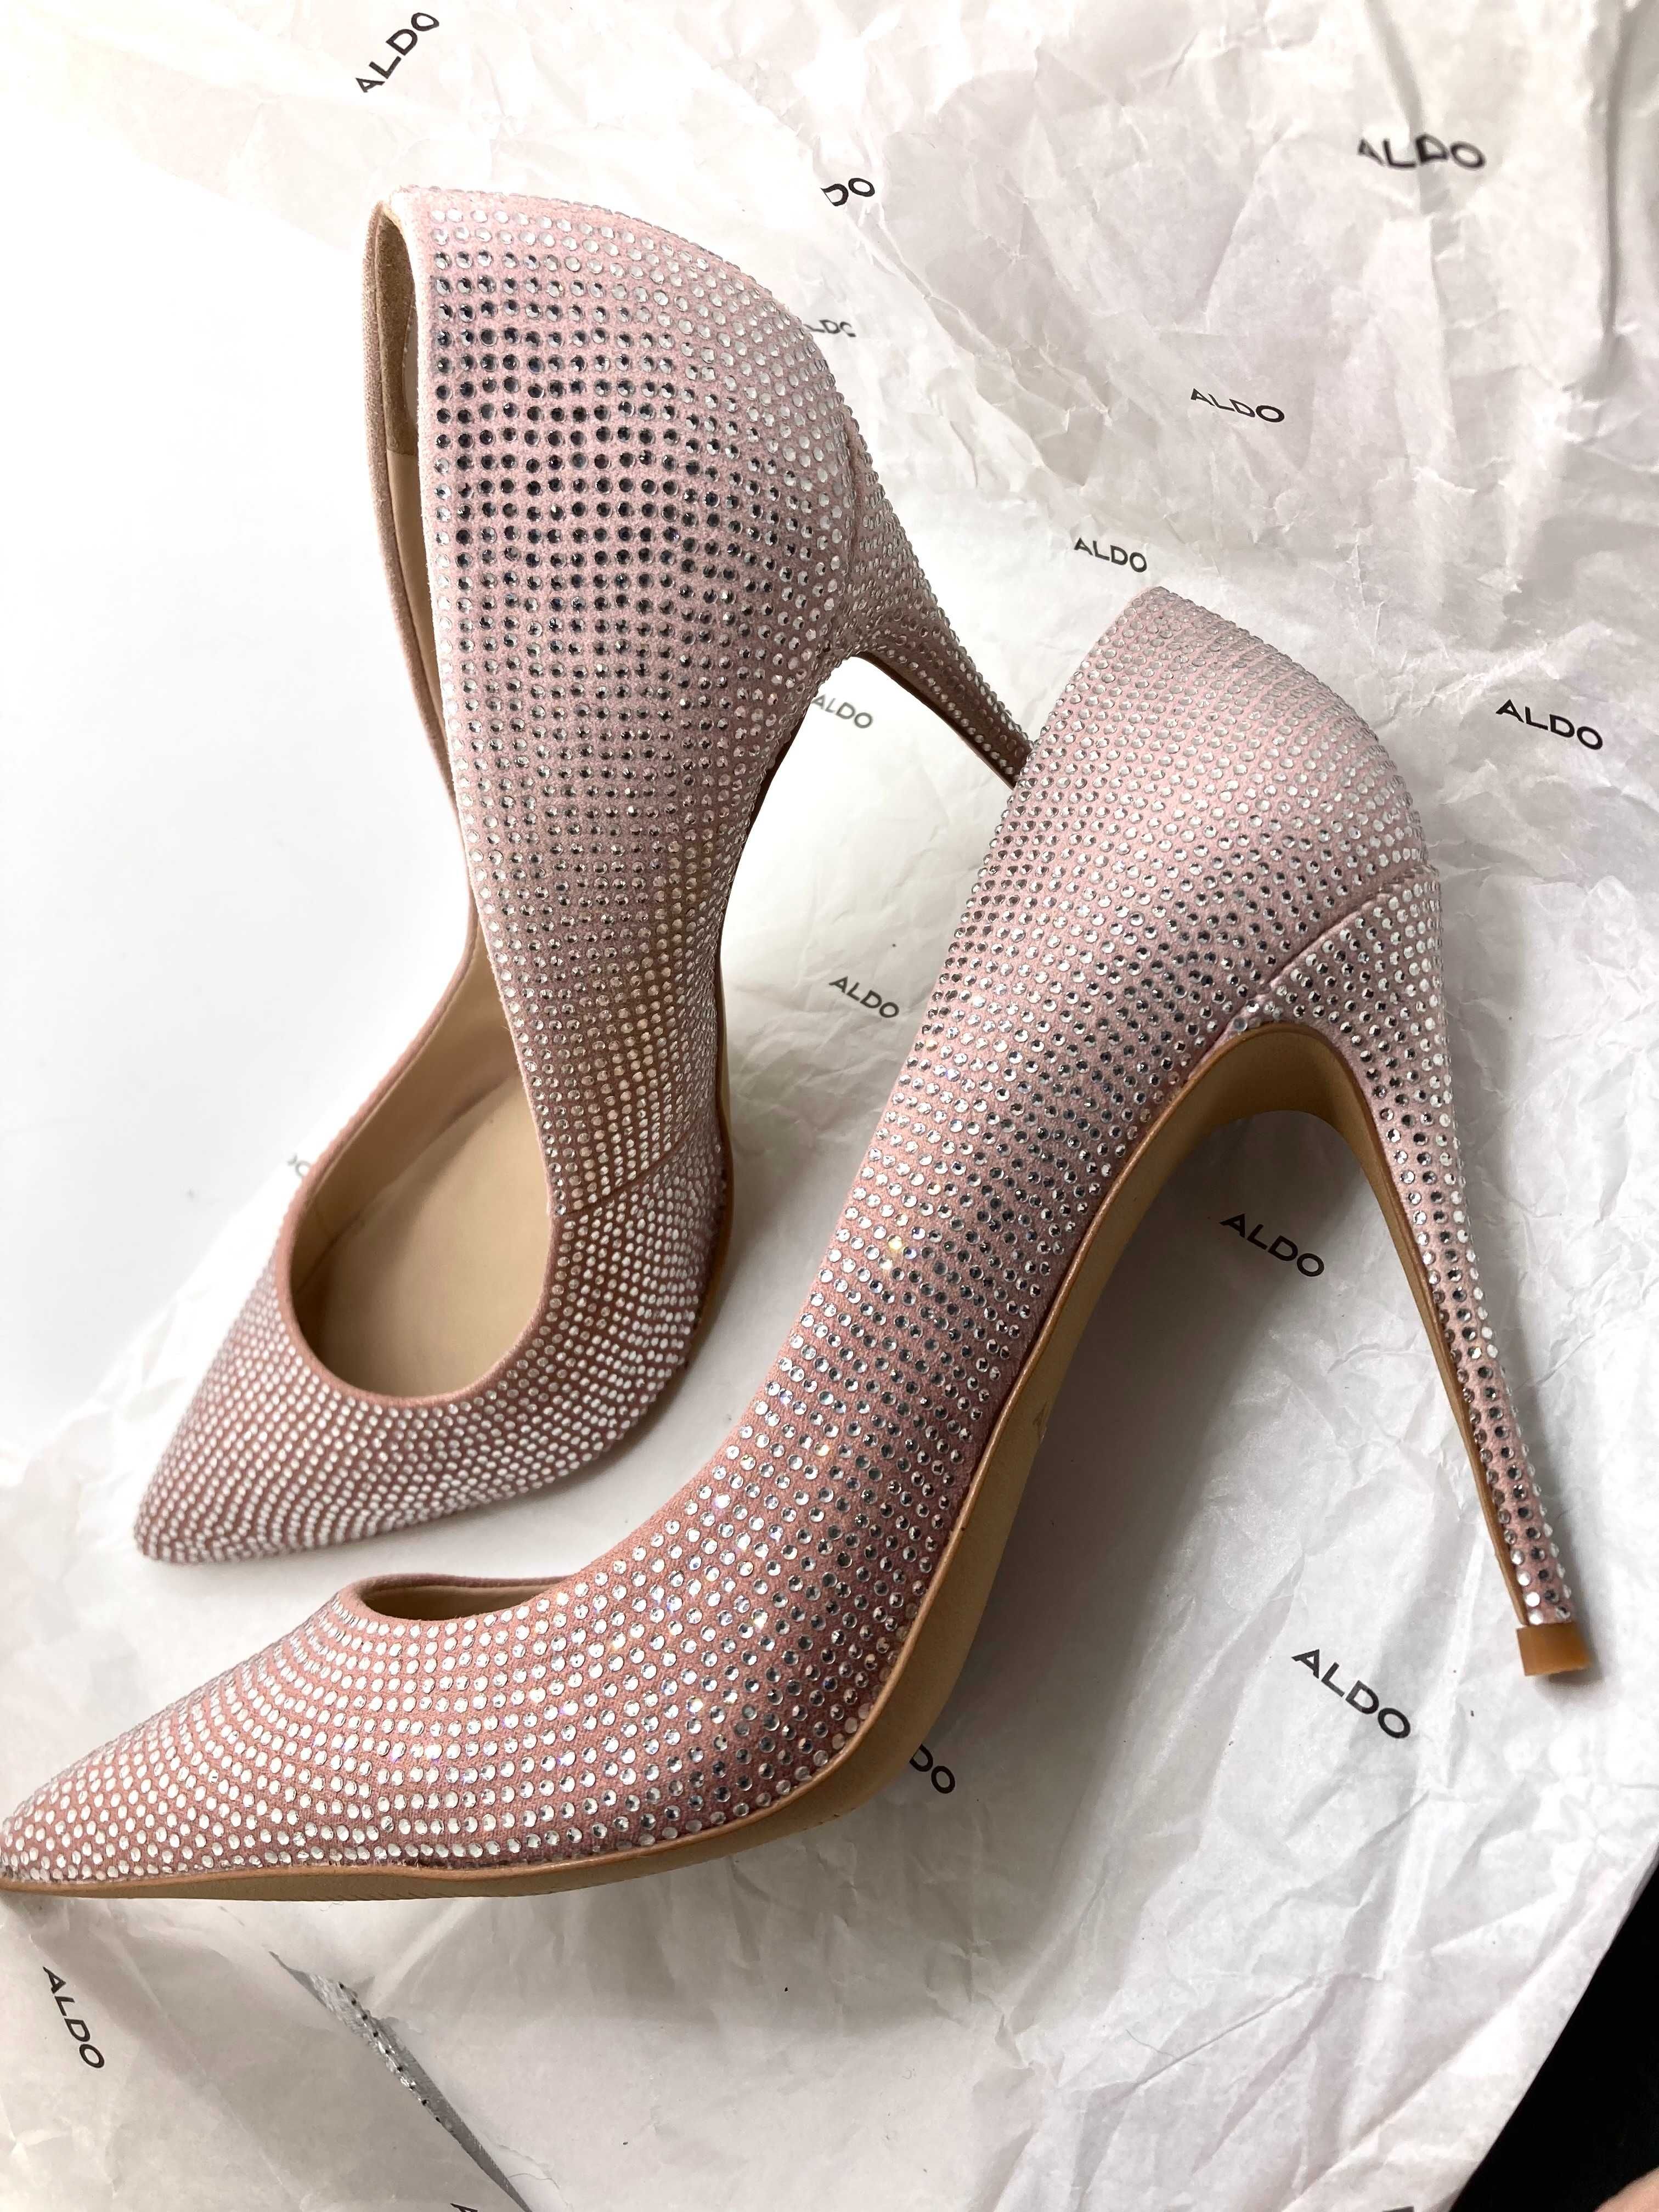 ALDO | Stessy - Marilyn Monroe Inspired Shoes